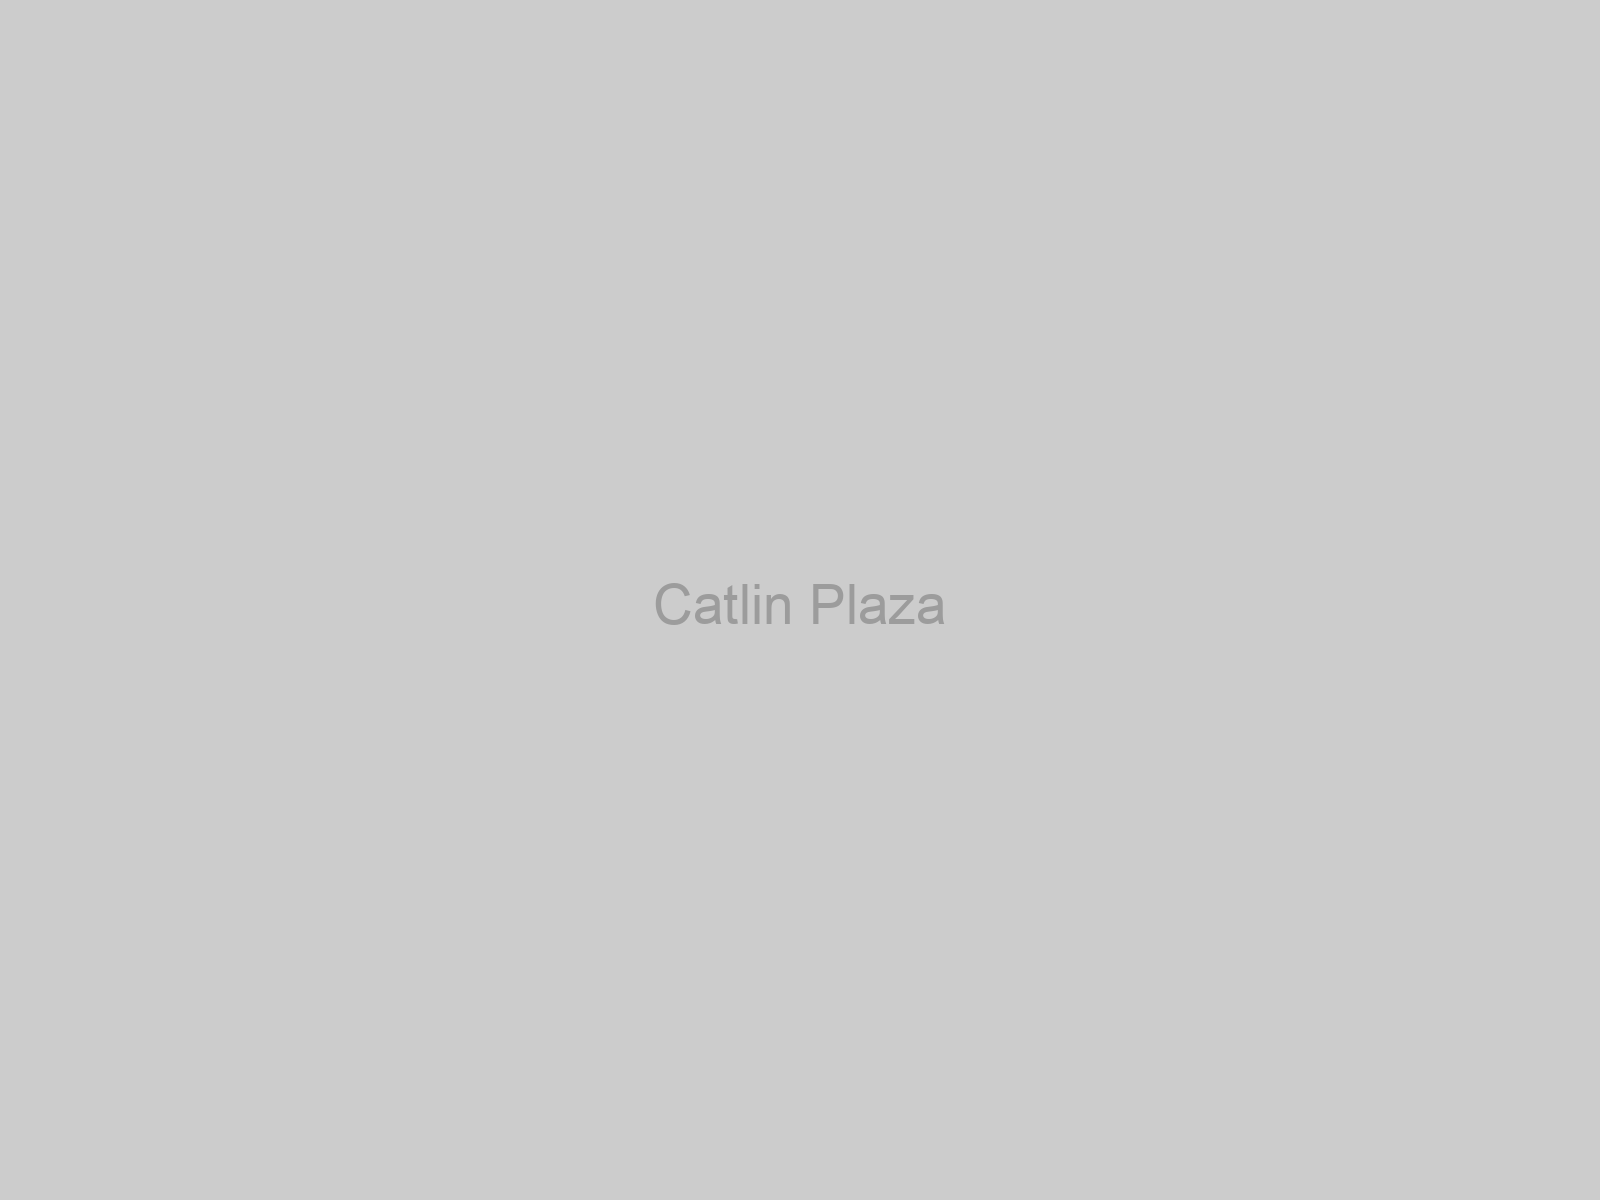 Catlin Plaza